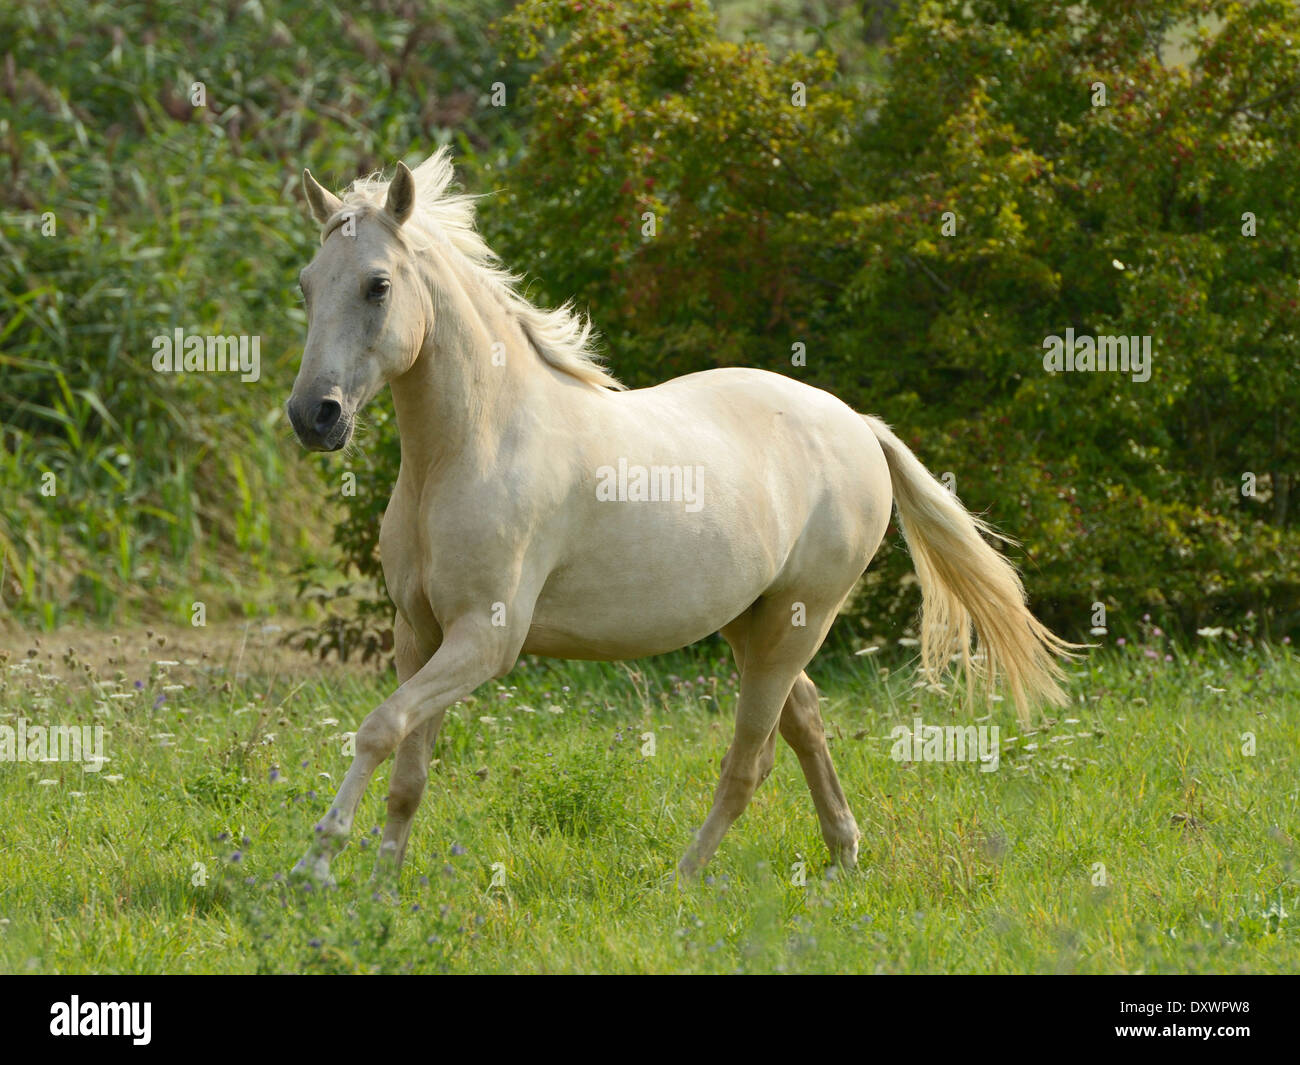 Palomino coloured Paso Fino horse galloping in the field Stock